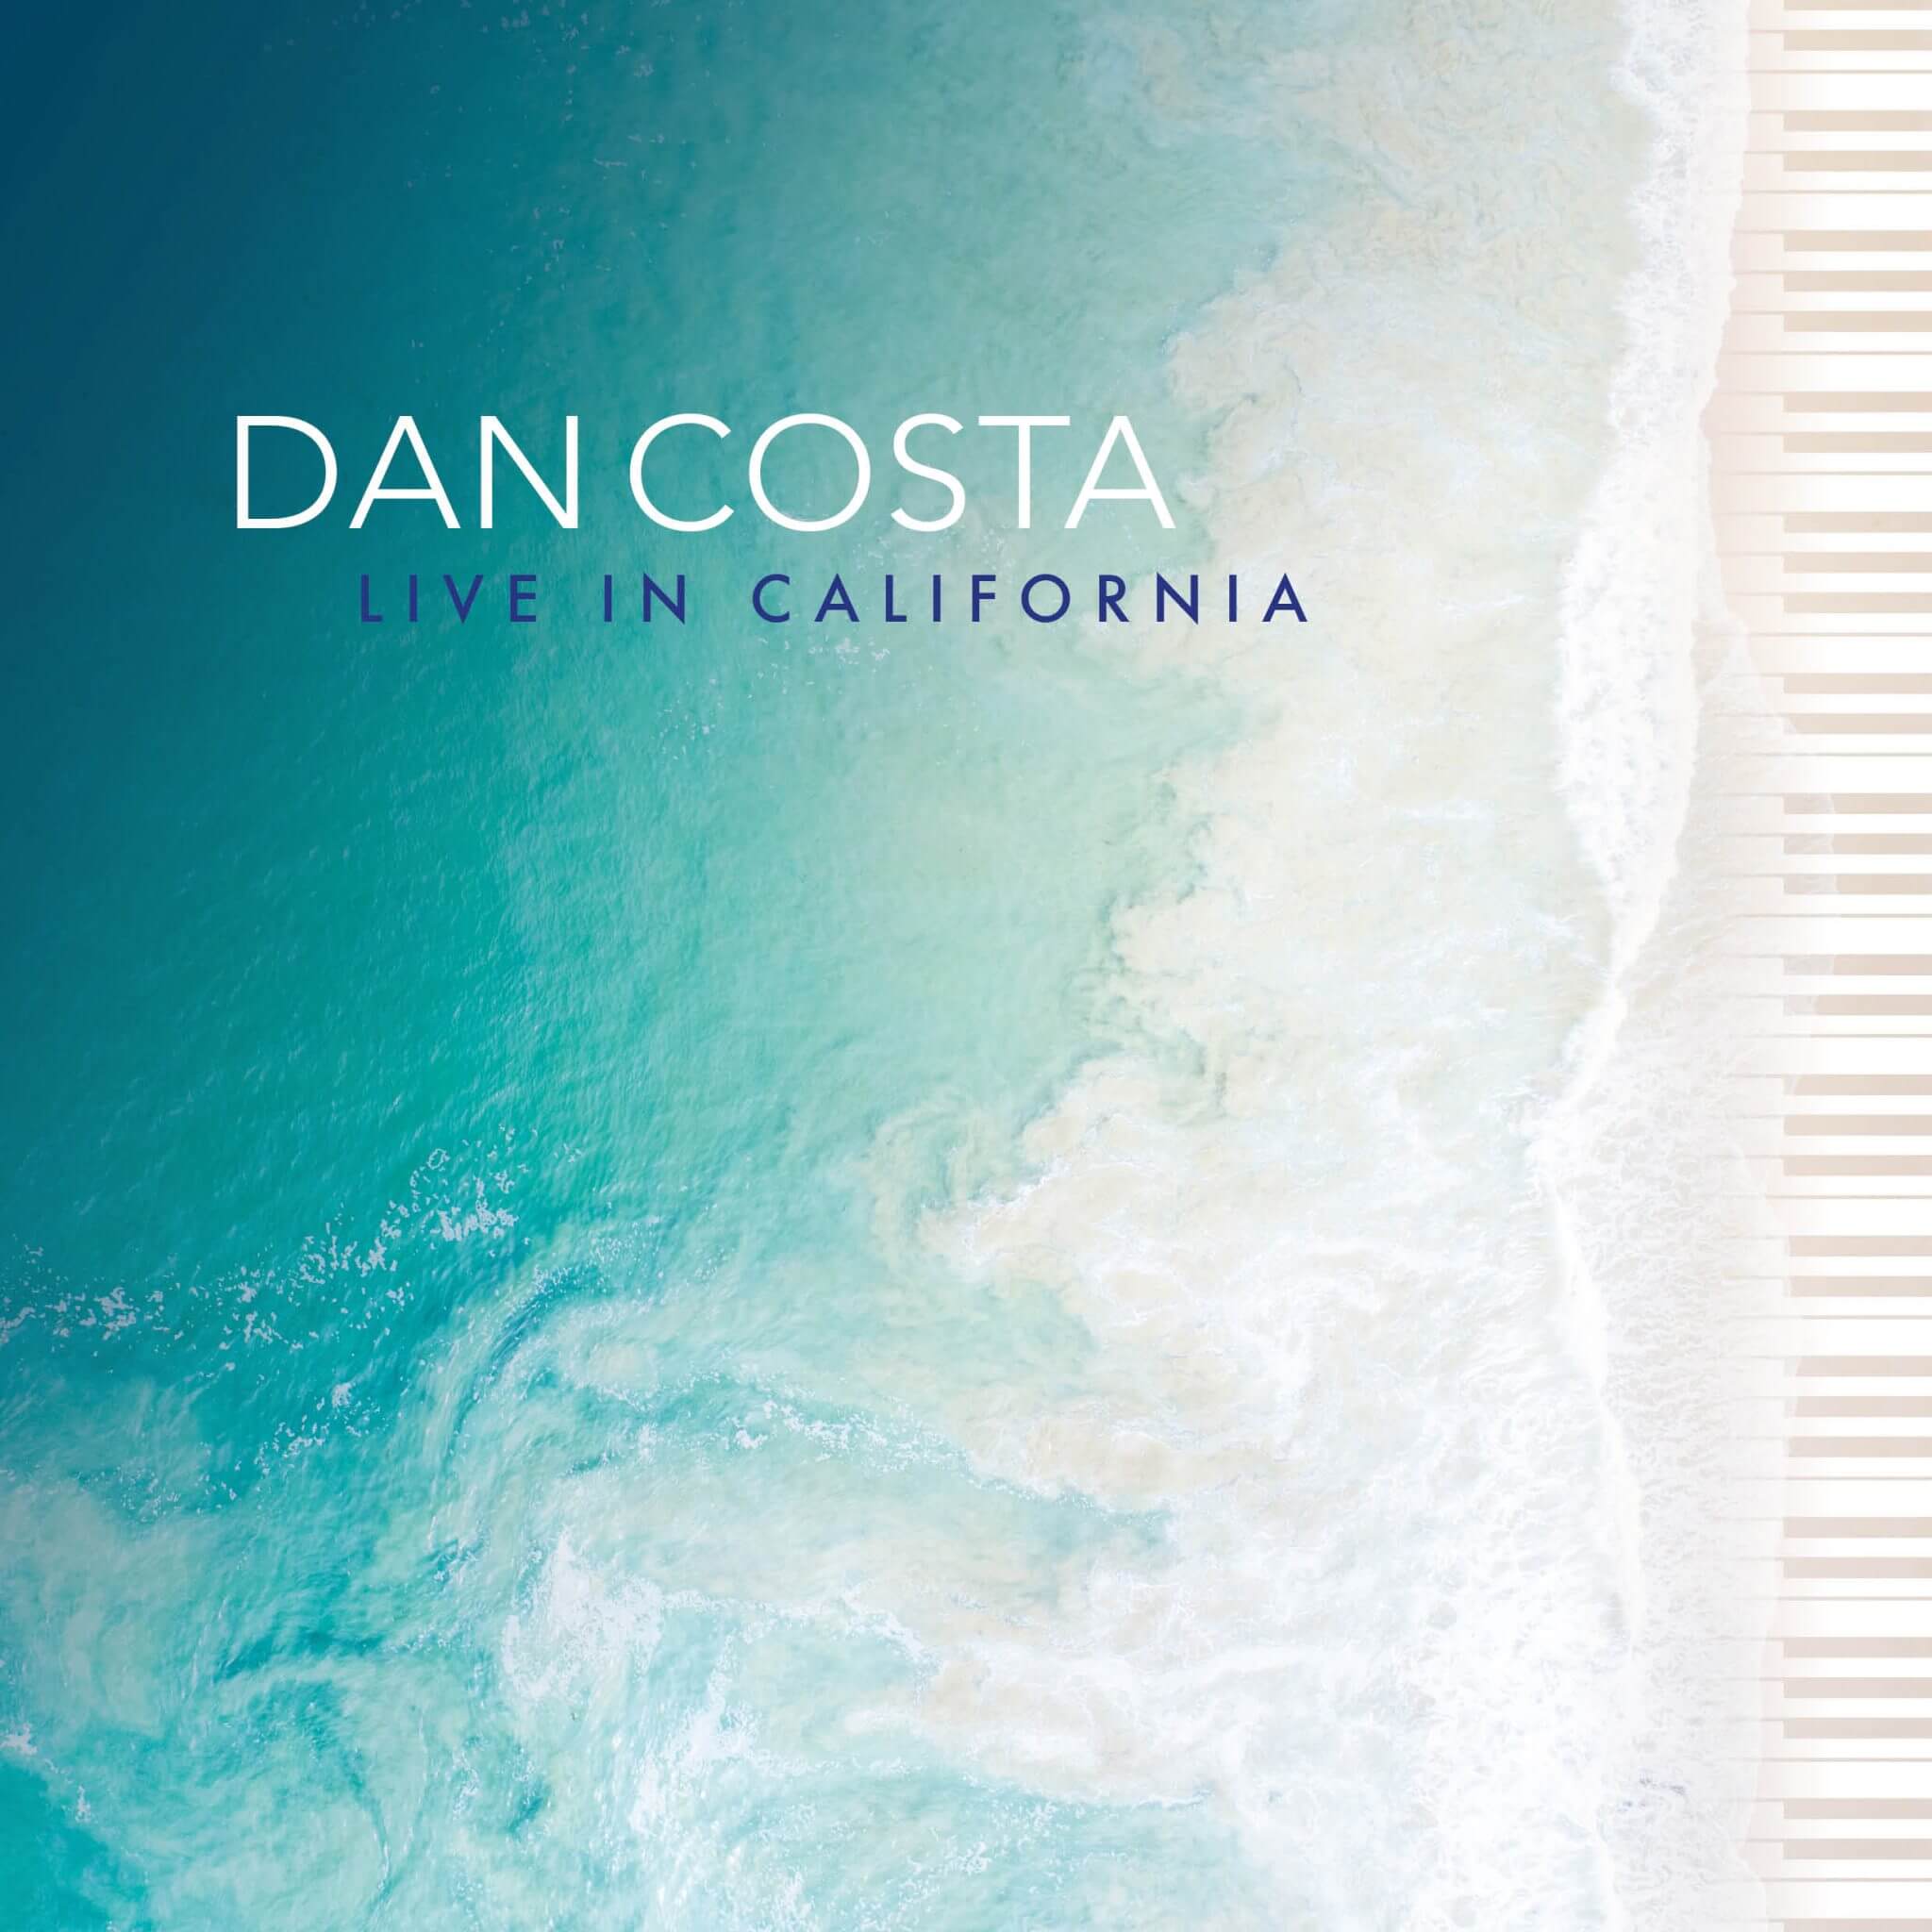 Sweetly sensuous solo piano Dan Costa